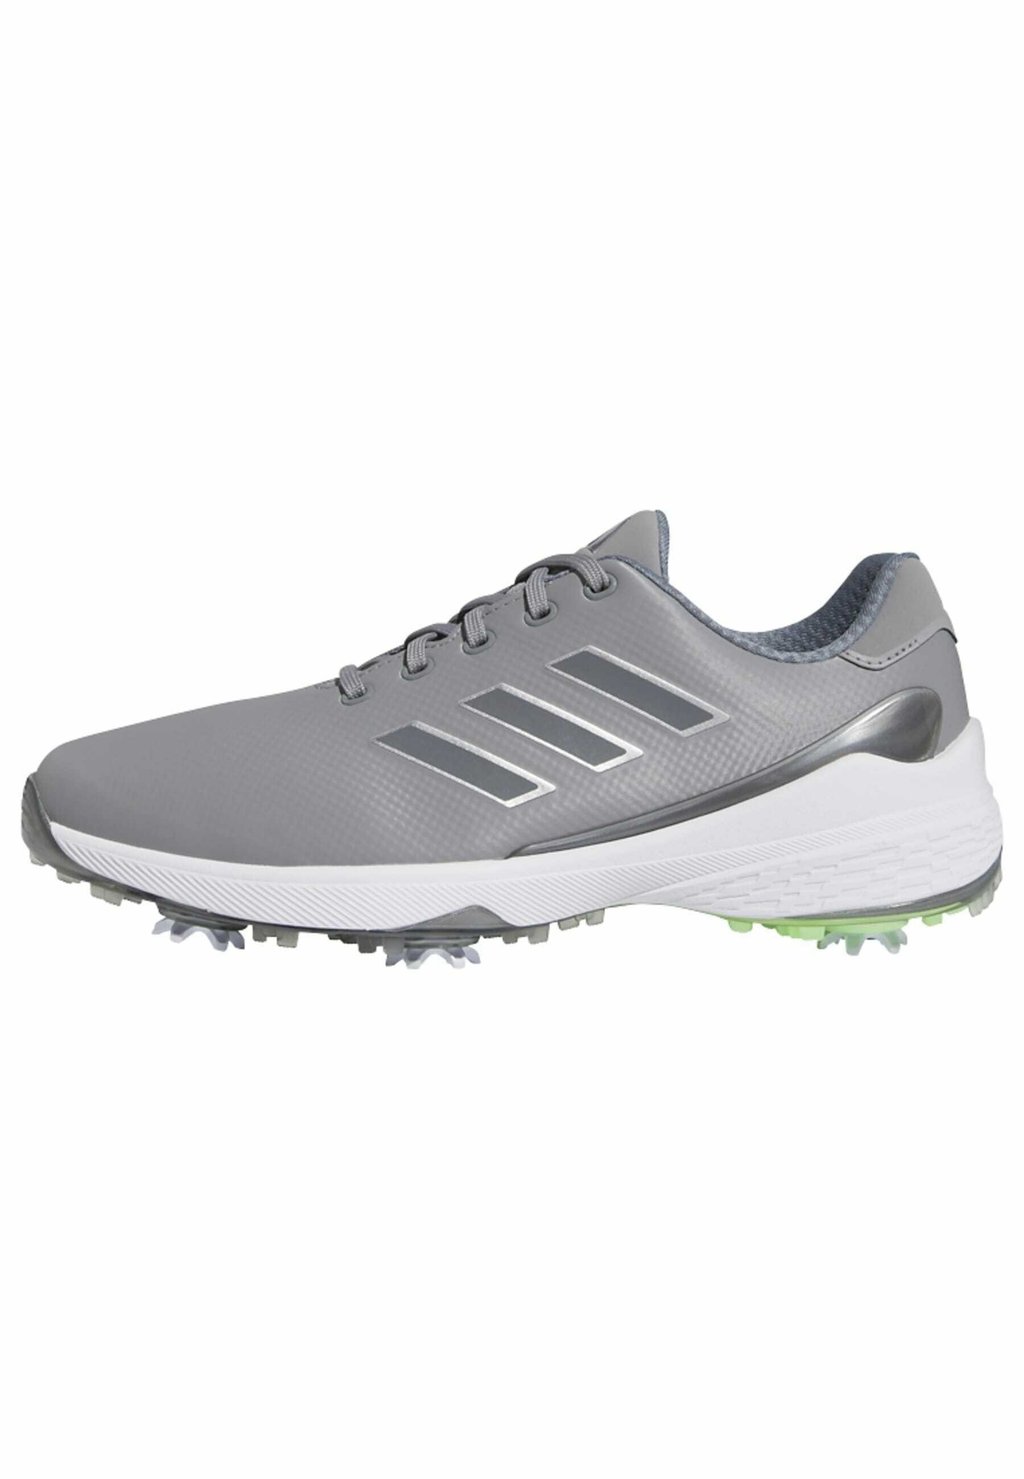 Туфли для гольфа adidas Golf, серый три железа металлик серебристый металлик kaiser magistro 14233 20 grey metallic